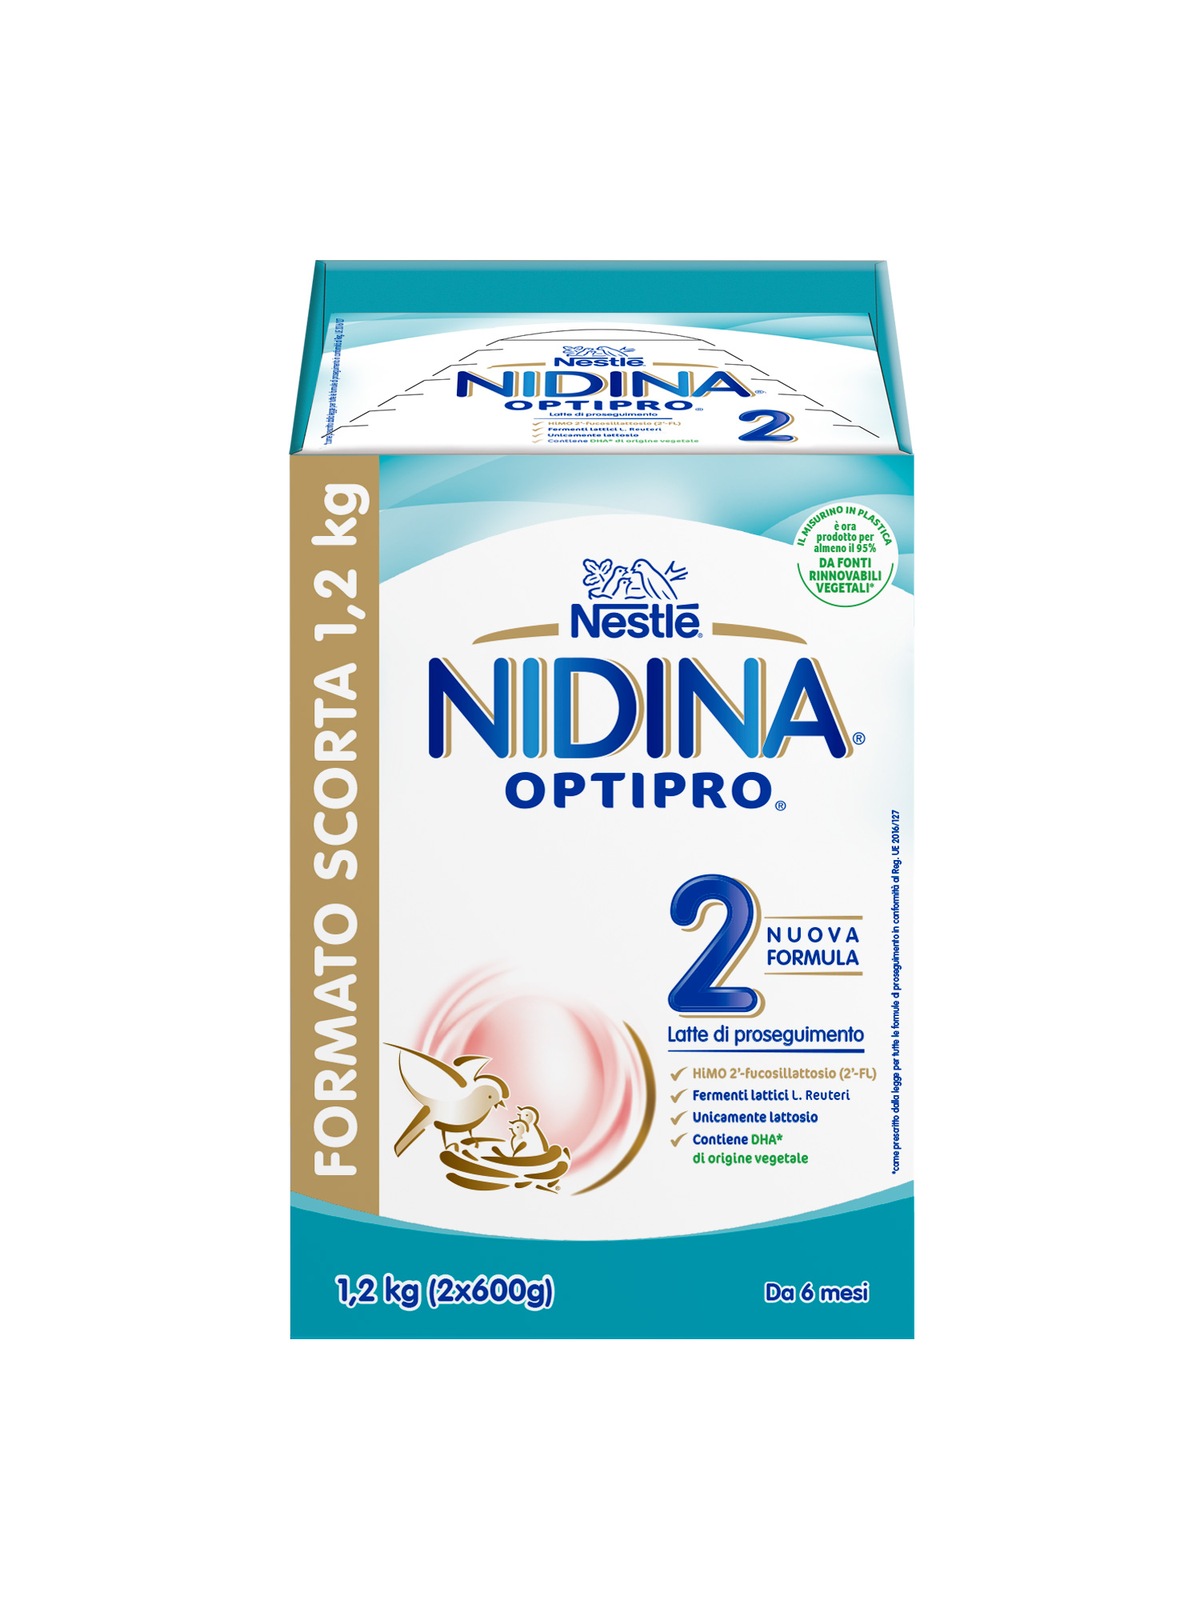 Nestlé nidina optipro 2 da 6 mesi, latte di proseguimento in polvere, 1,2  kg (2x600g) - Bimbostore